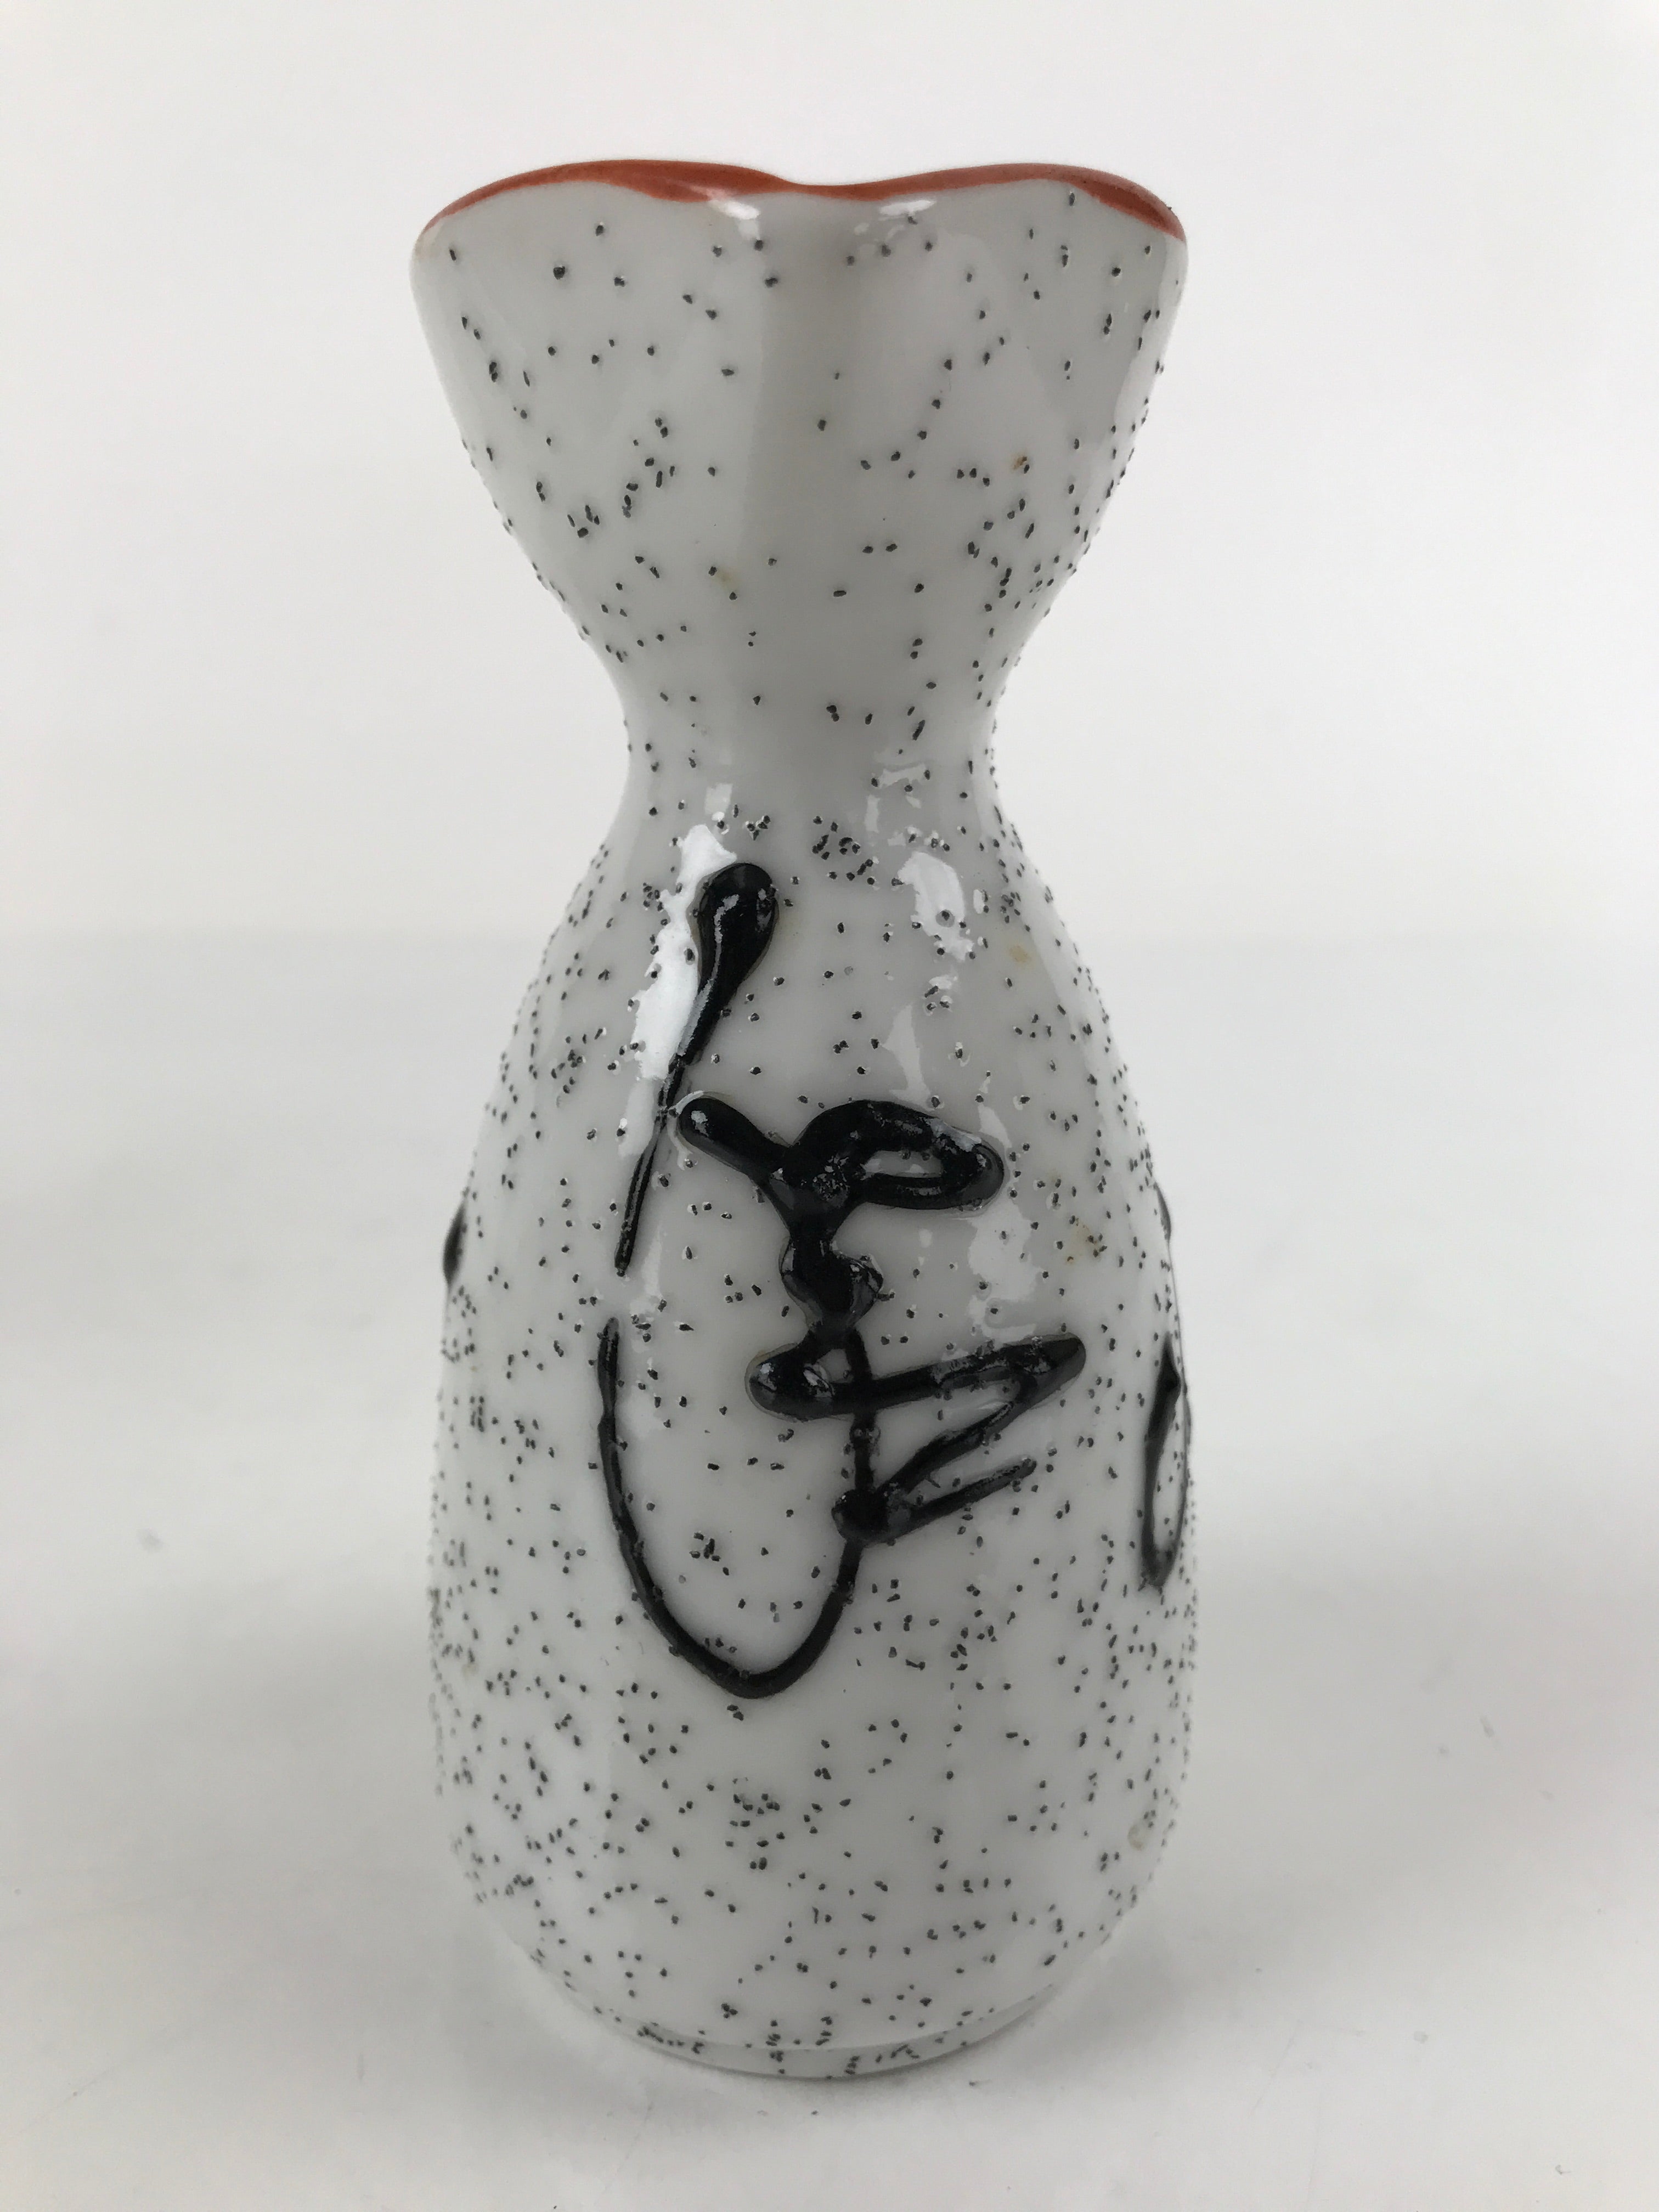 Japanese Sake Bottle Ceramic Tokkuri Ichigo Vtg White Black Ideograms TS646